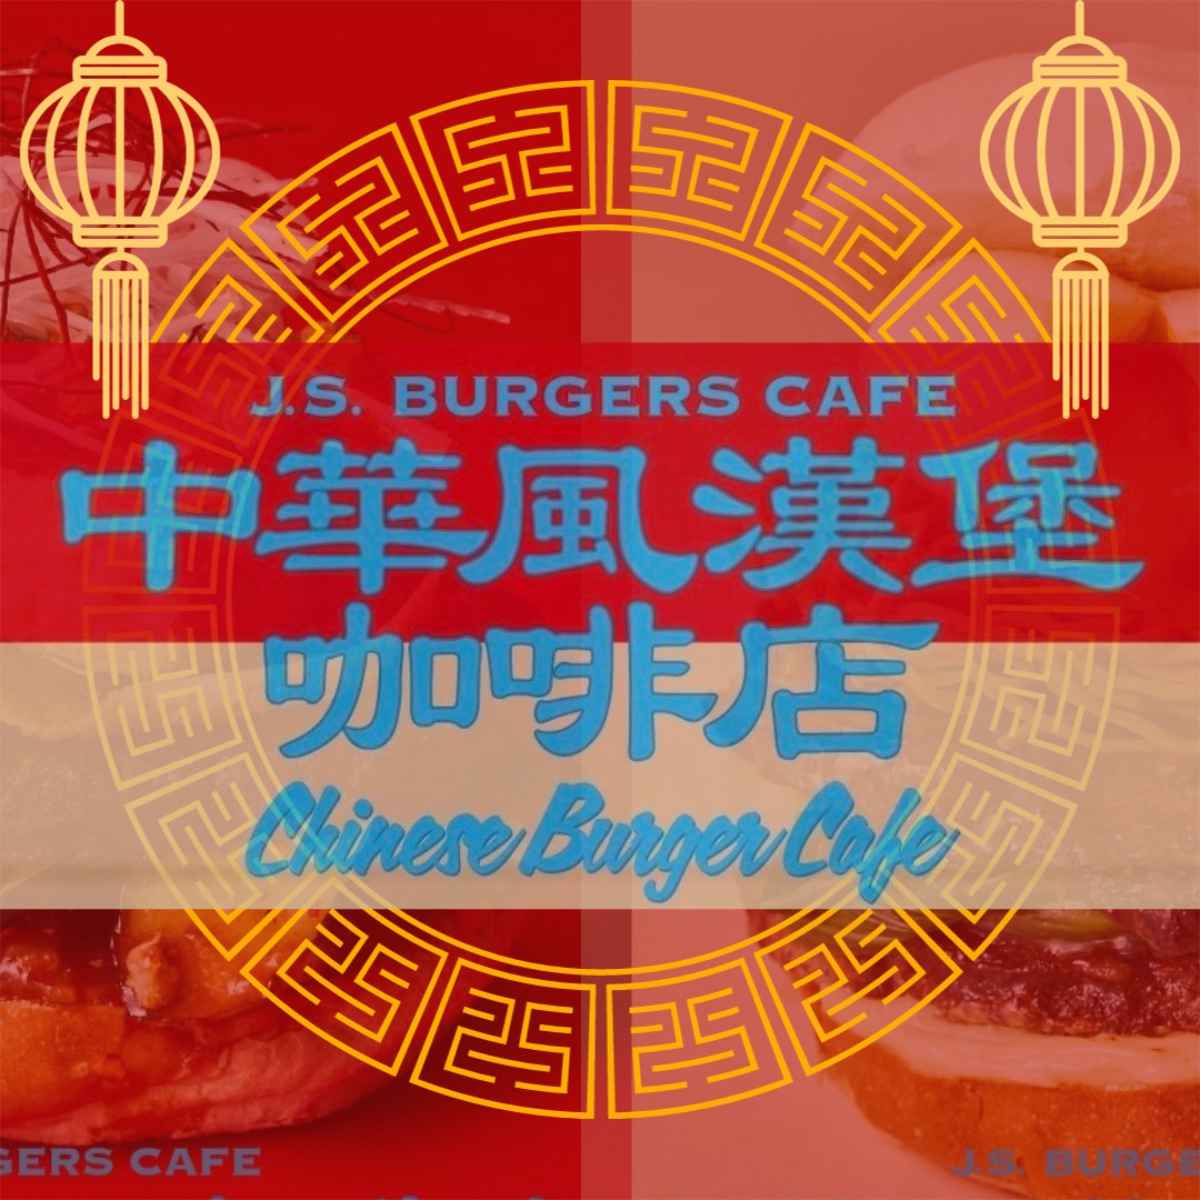 『J.S. BURGERS CAFE』が「麻婆豆腐割包」と「叉焼麵割包」を販売　神戸市 [画像]